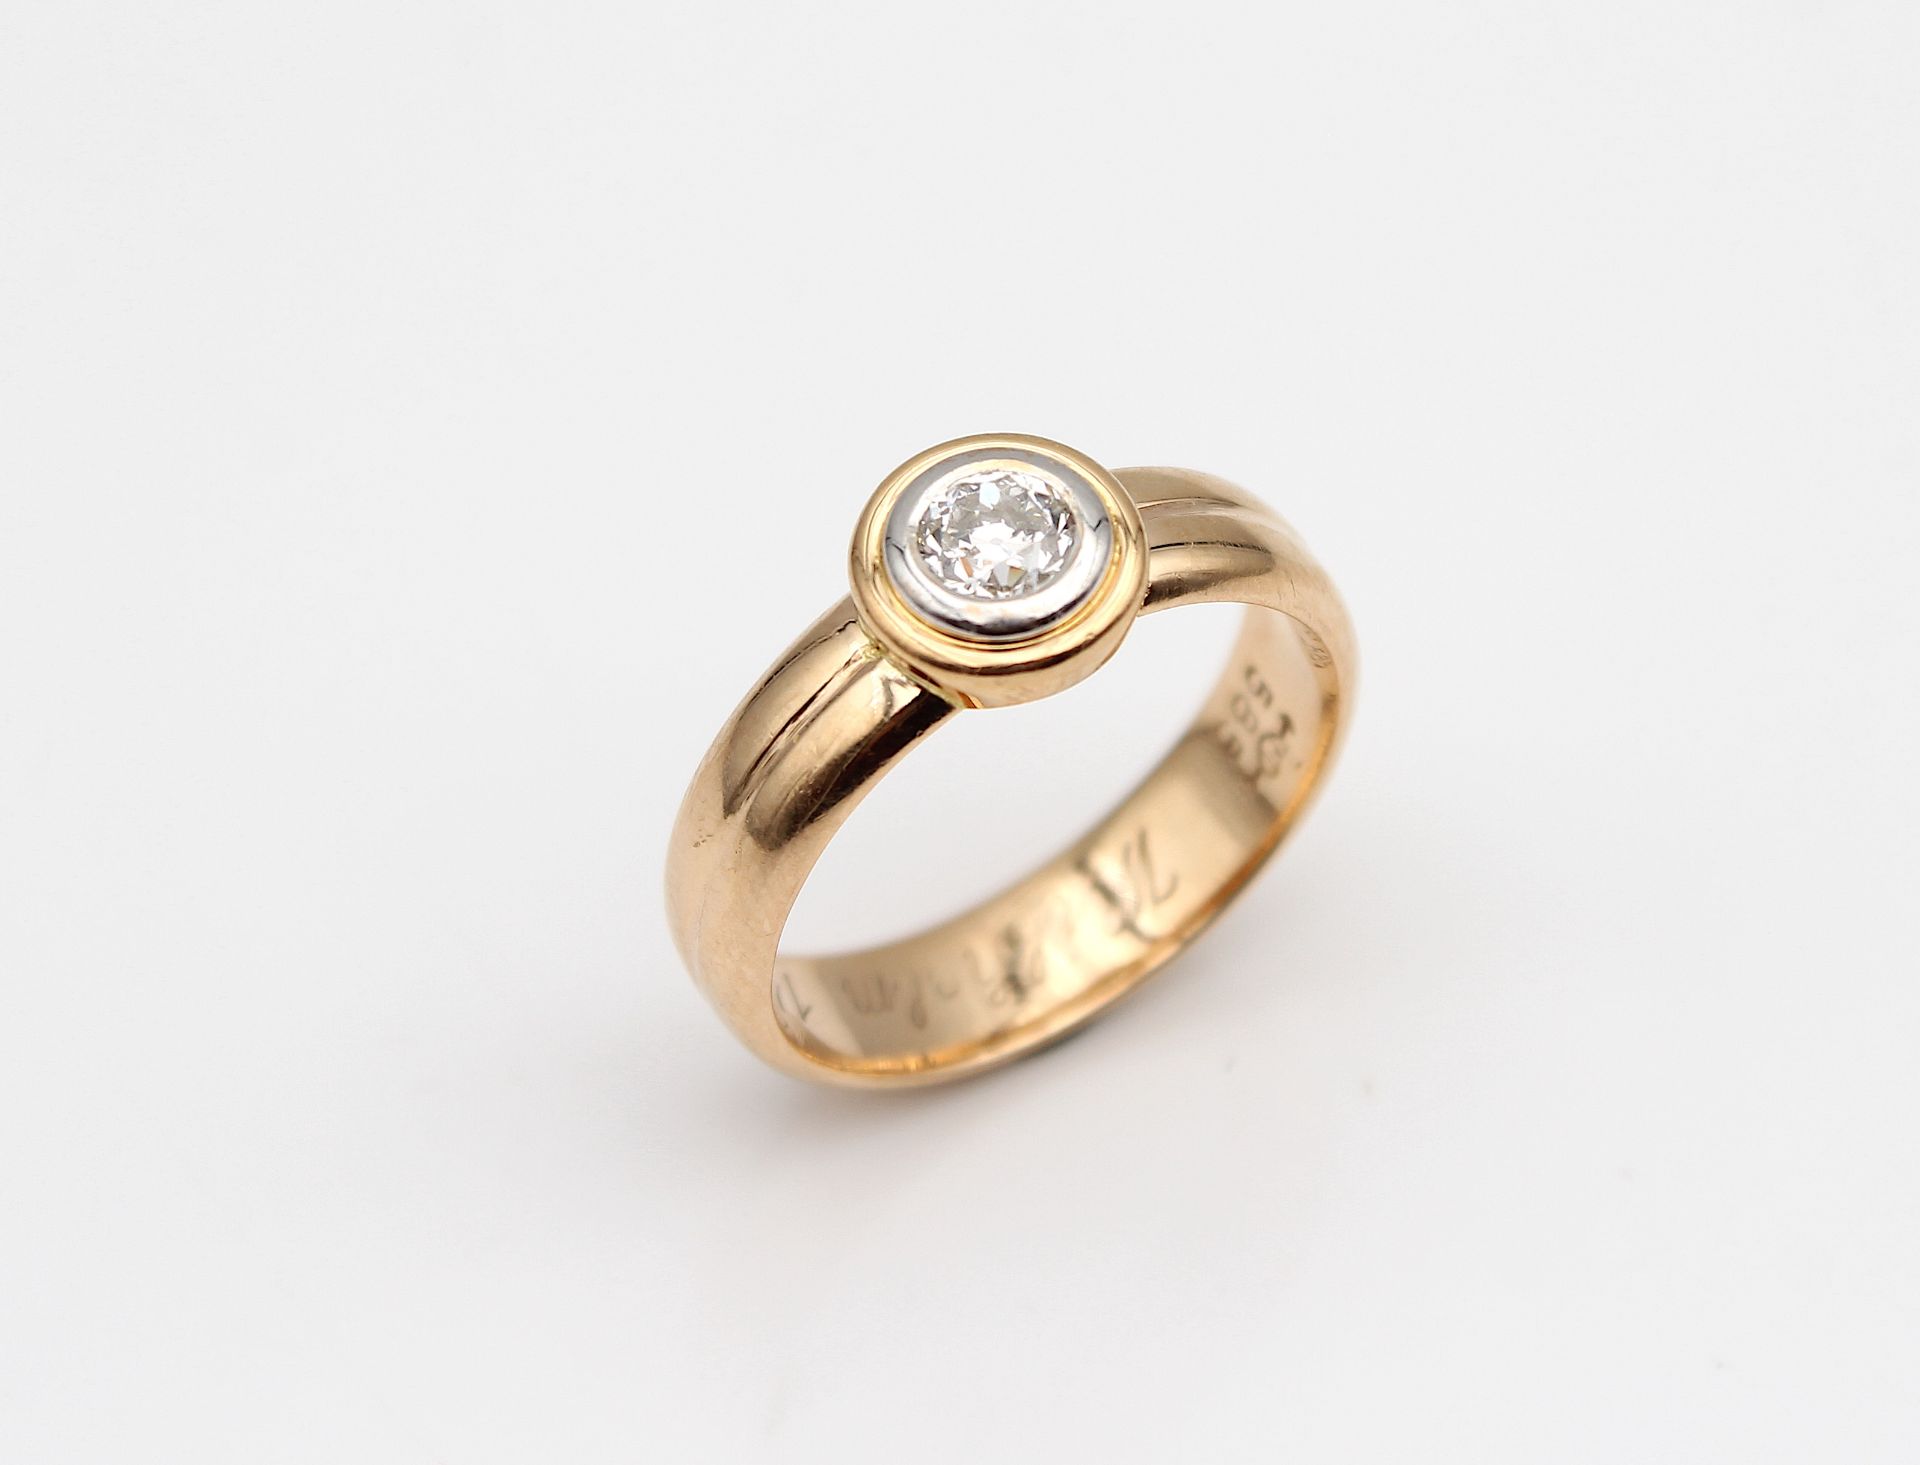 Vintage Niessing ring with diamond